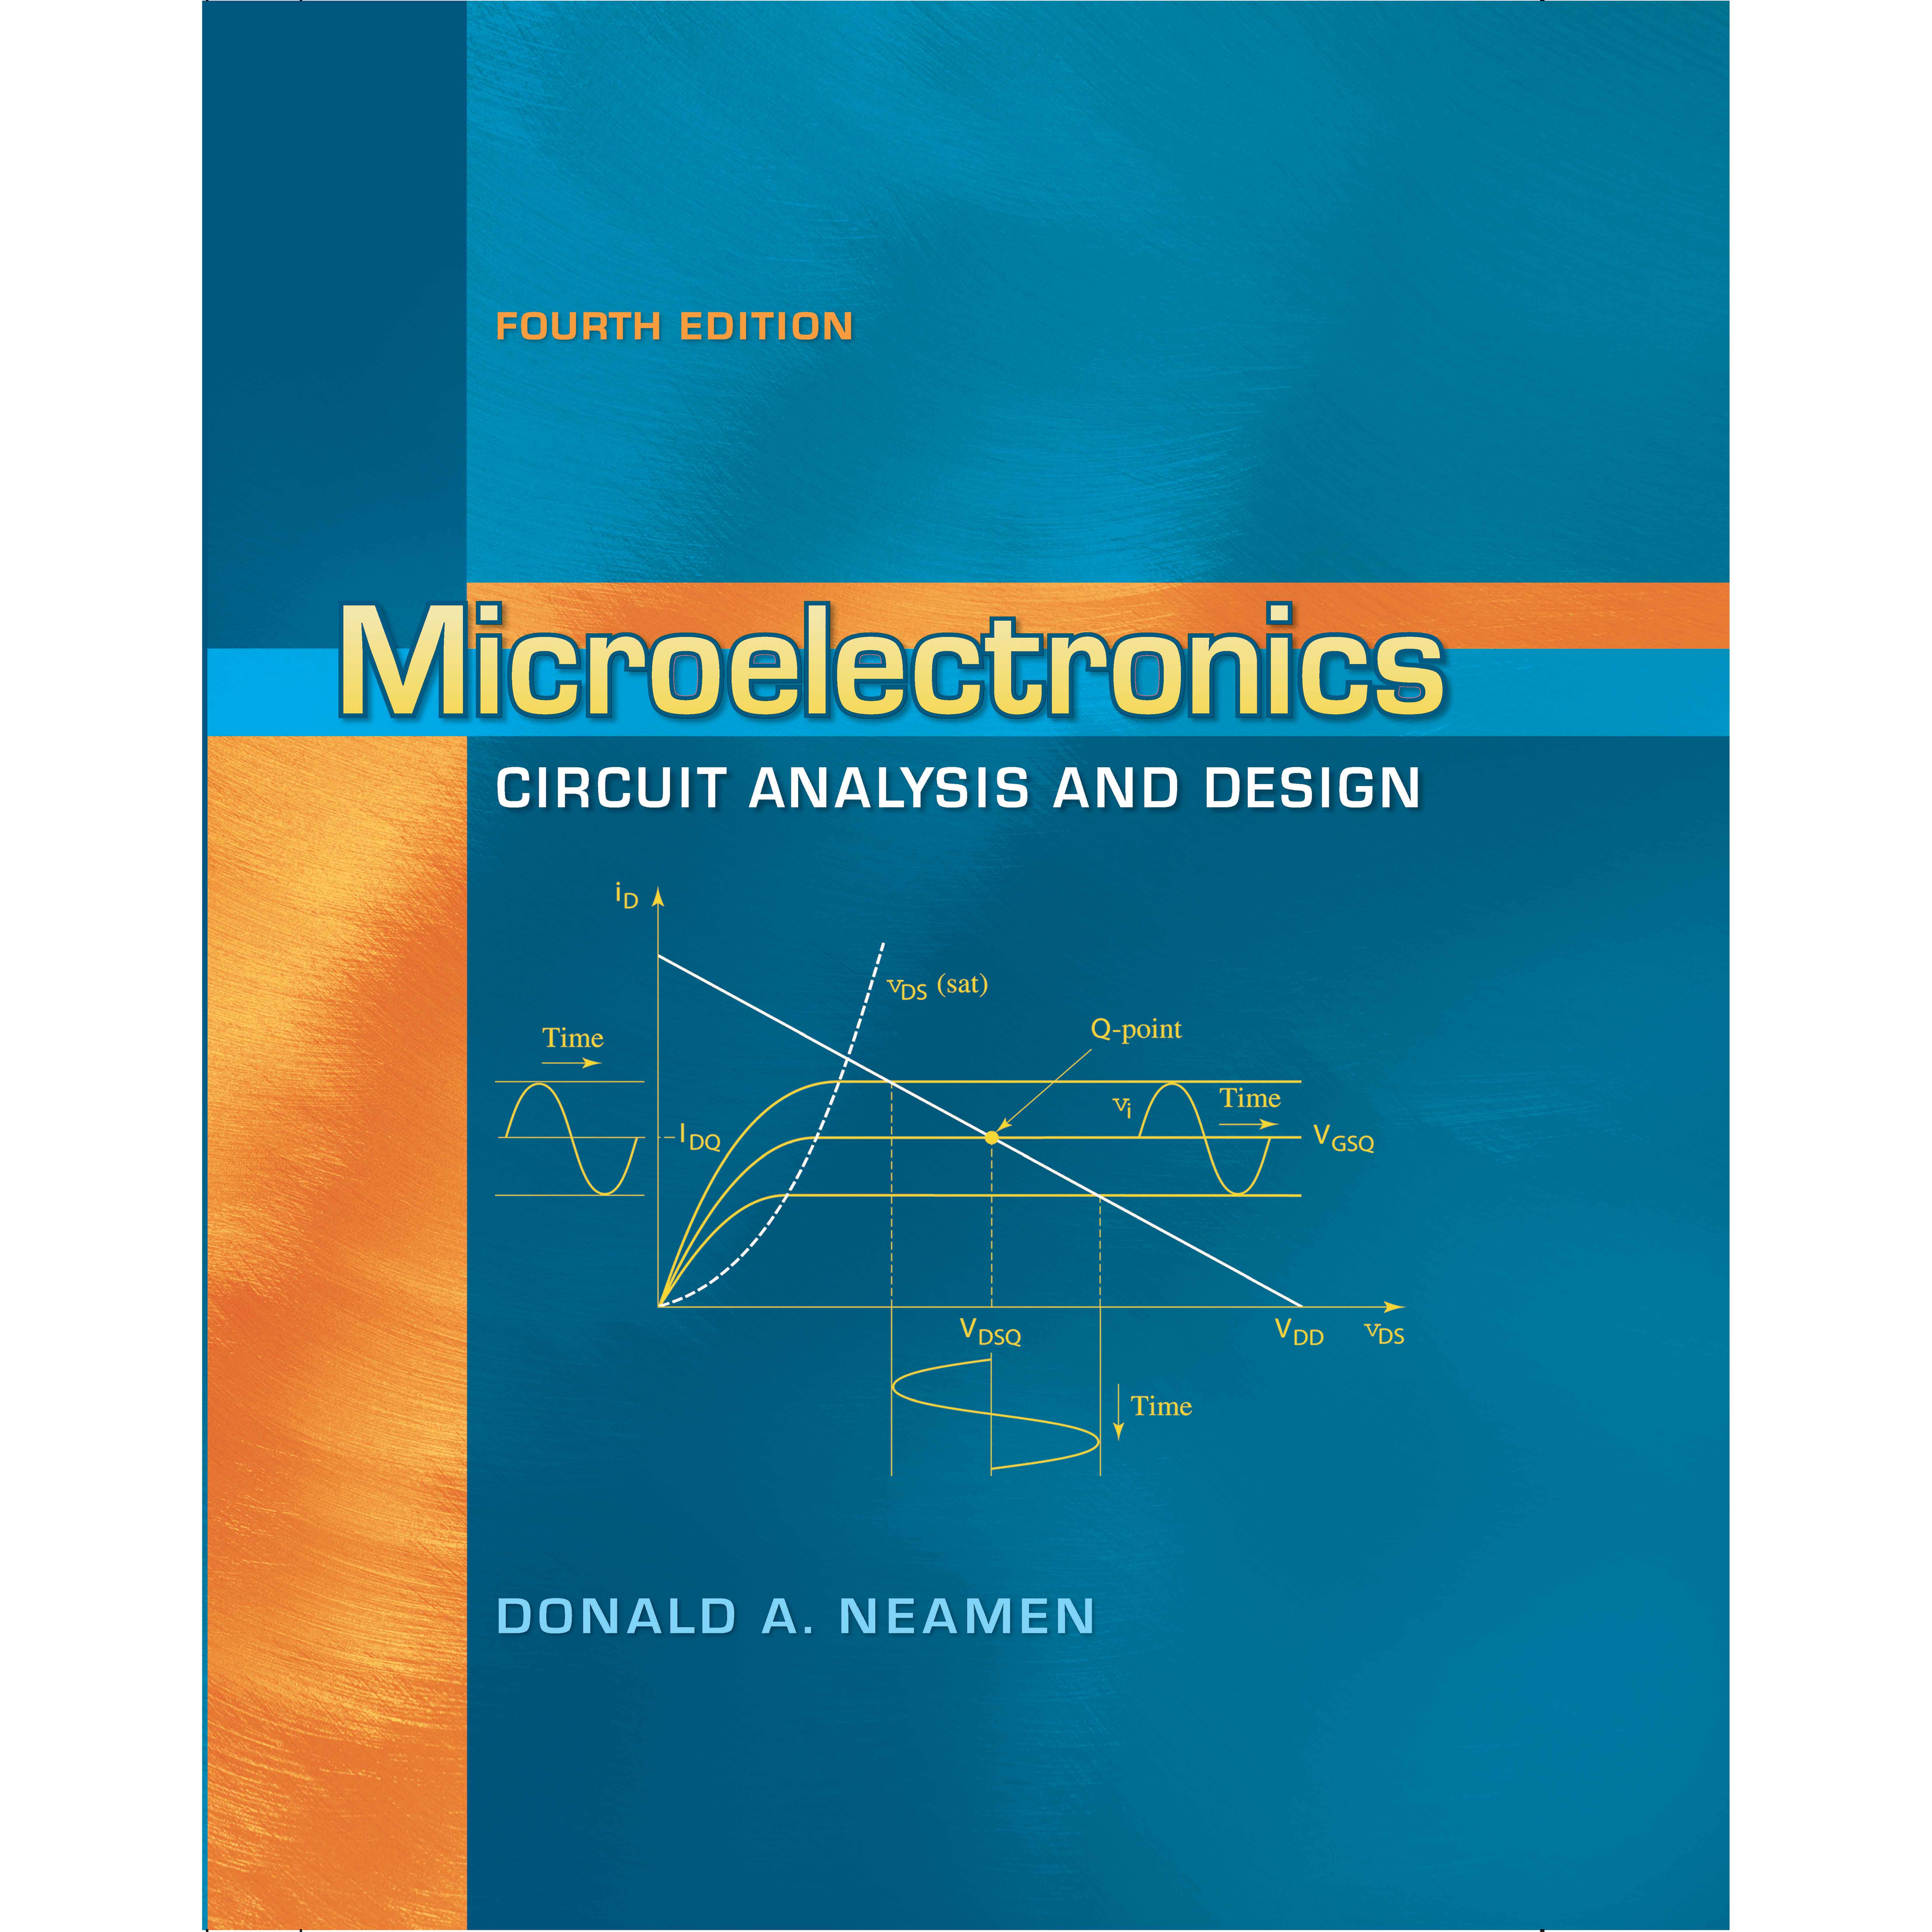 Microelectronics, Circuit Analysis and Design